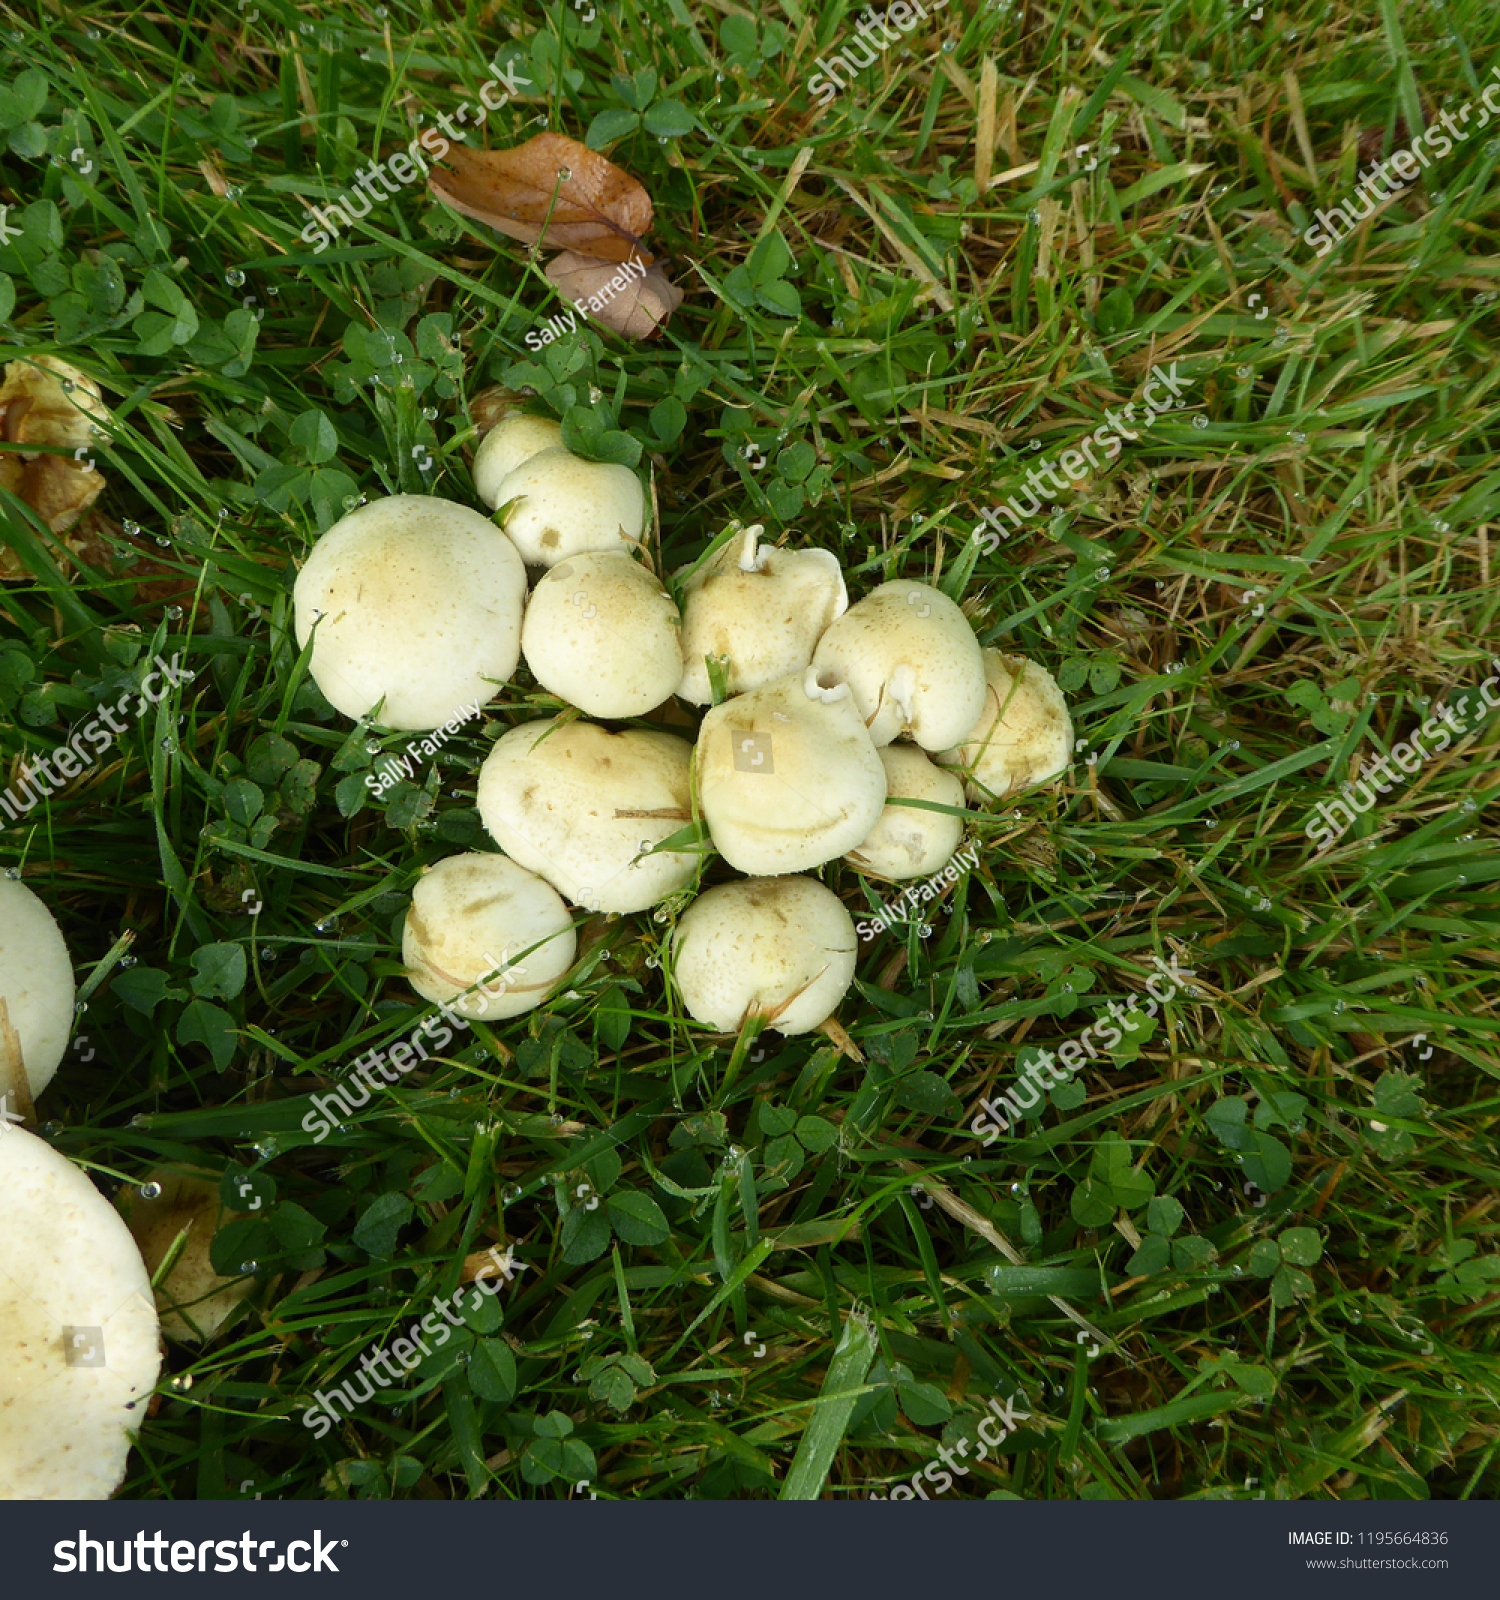 Mushrooms Growing On Garden Lawn Royalty Free Stock Image